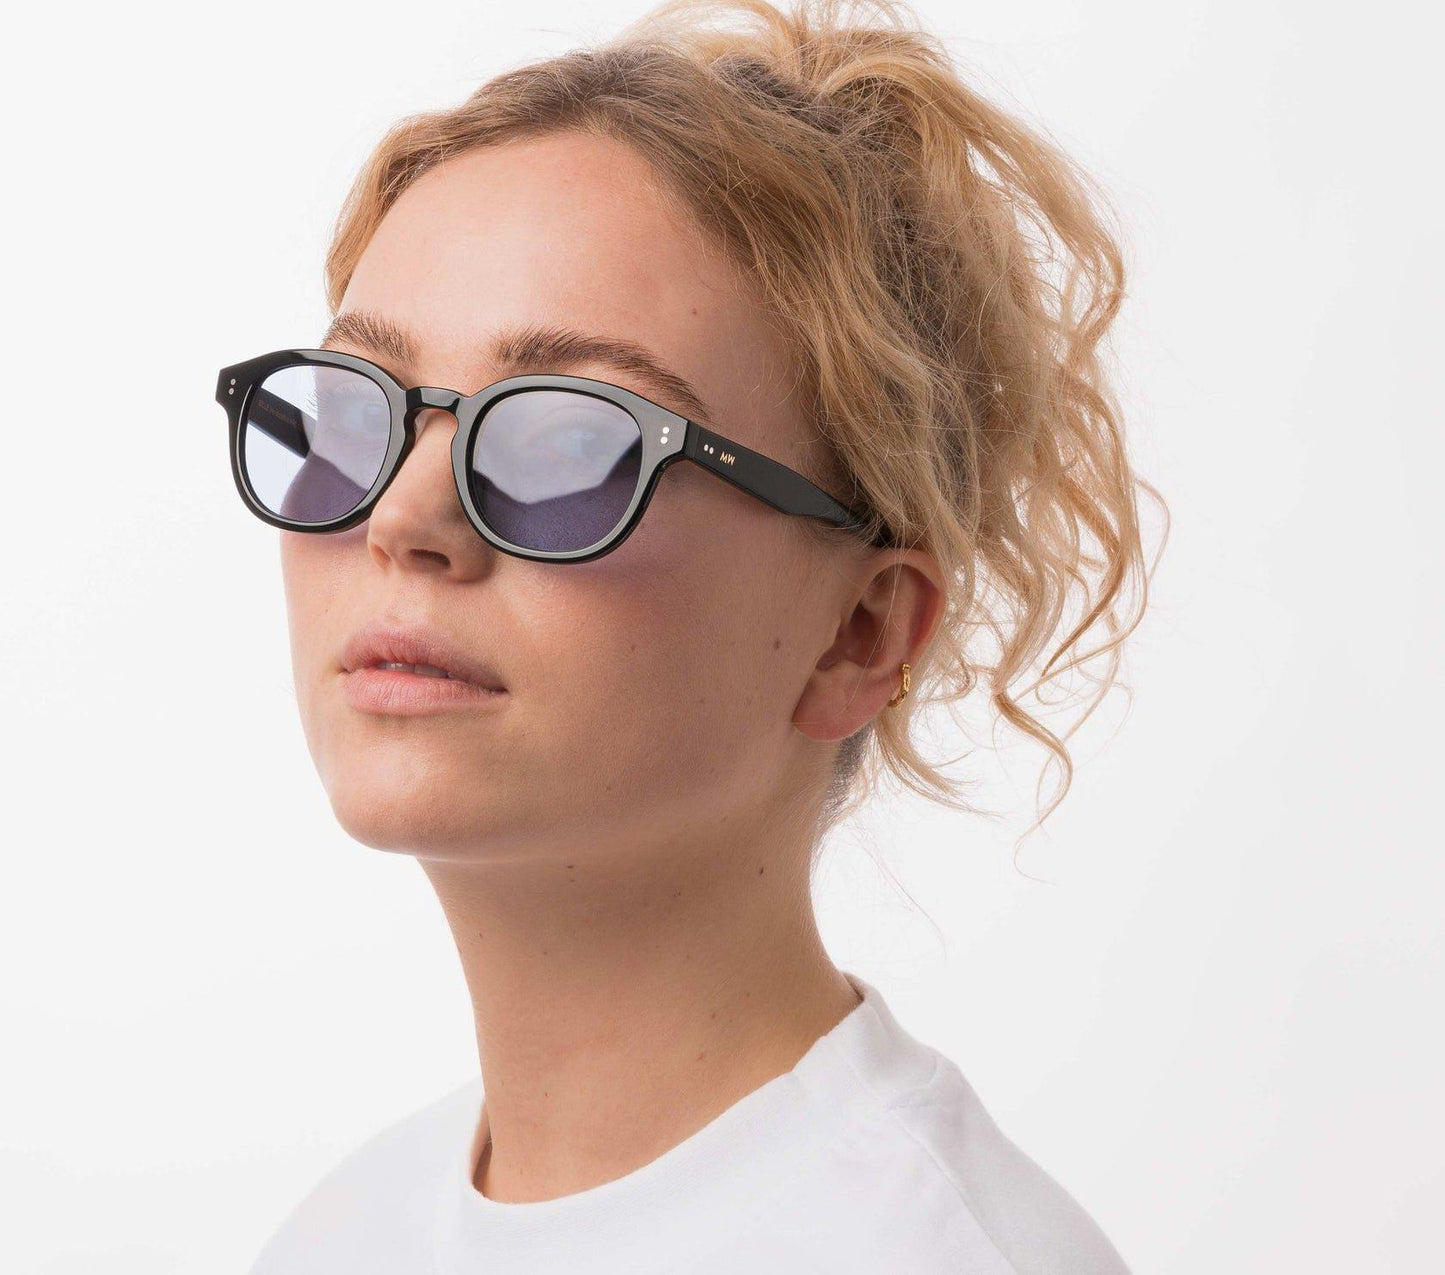 Bille Rose, Round sunglasses for men and women blue lens UV400 protection